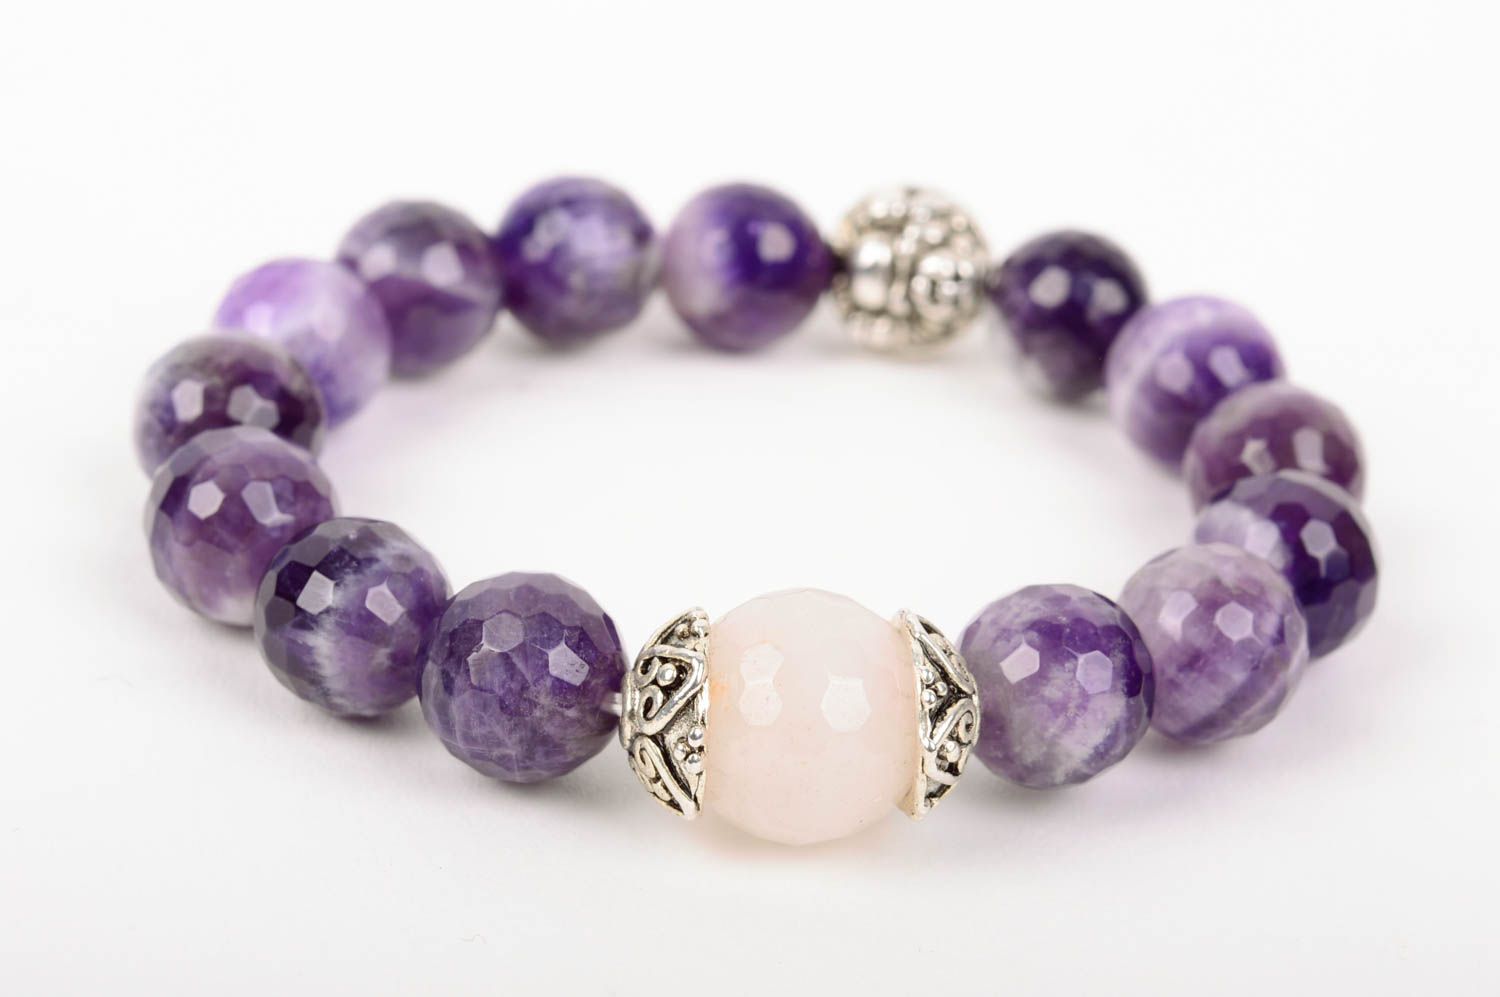 Handmade bracelet gemstone jewelry fashion accessories gifts for girl photo 1